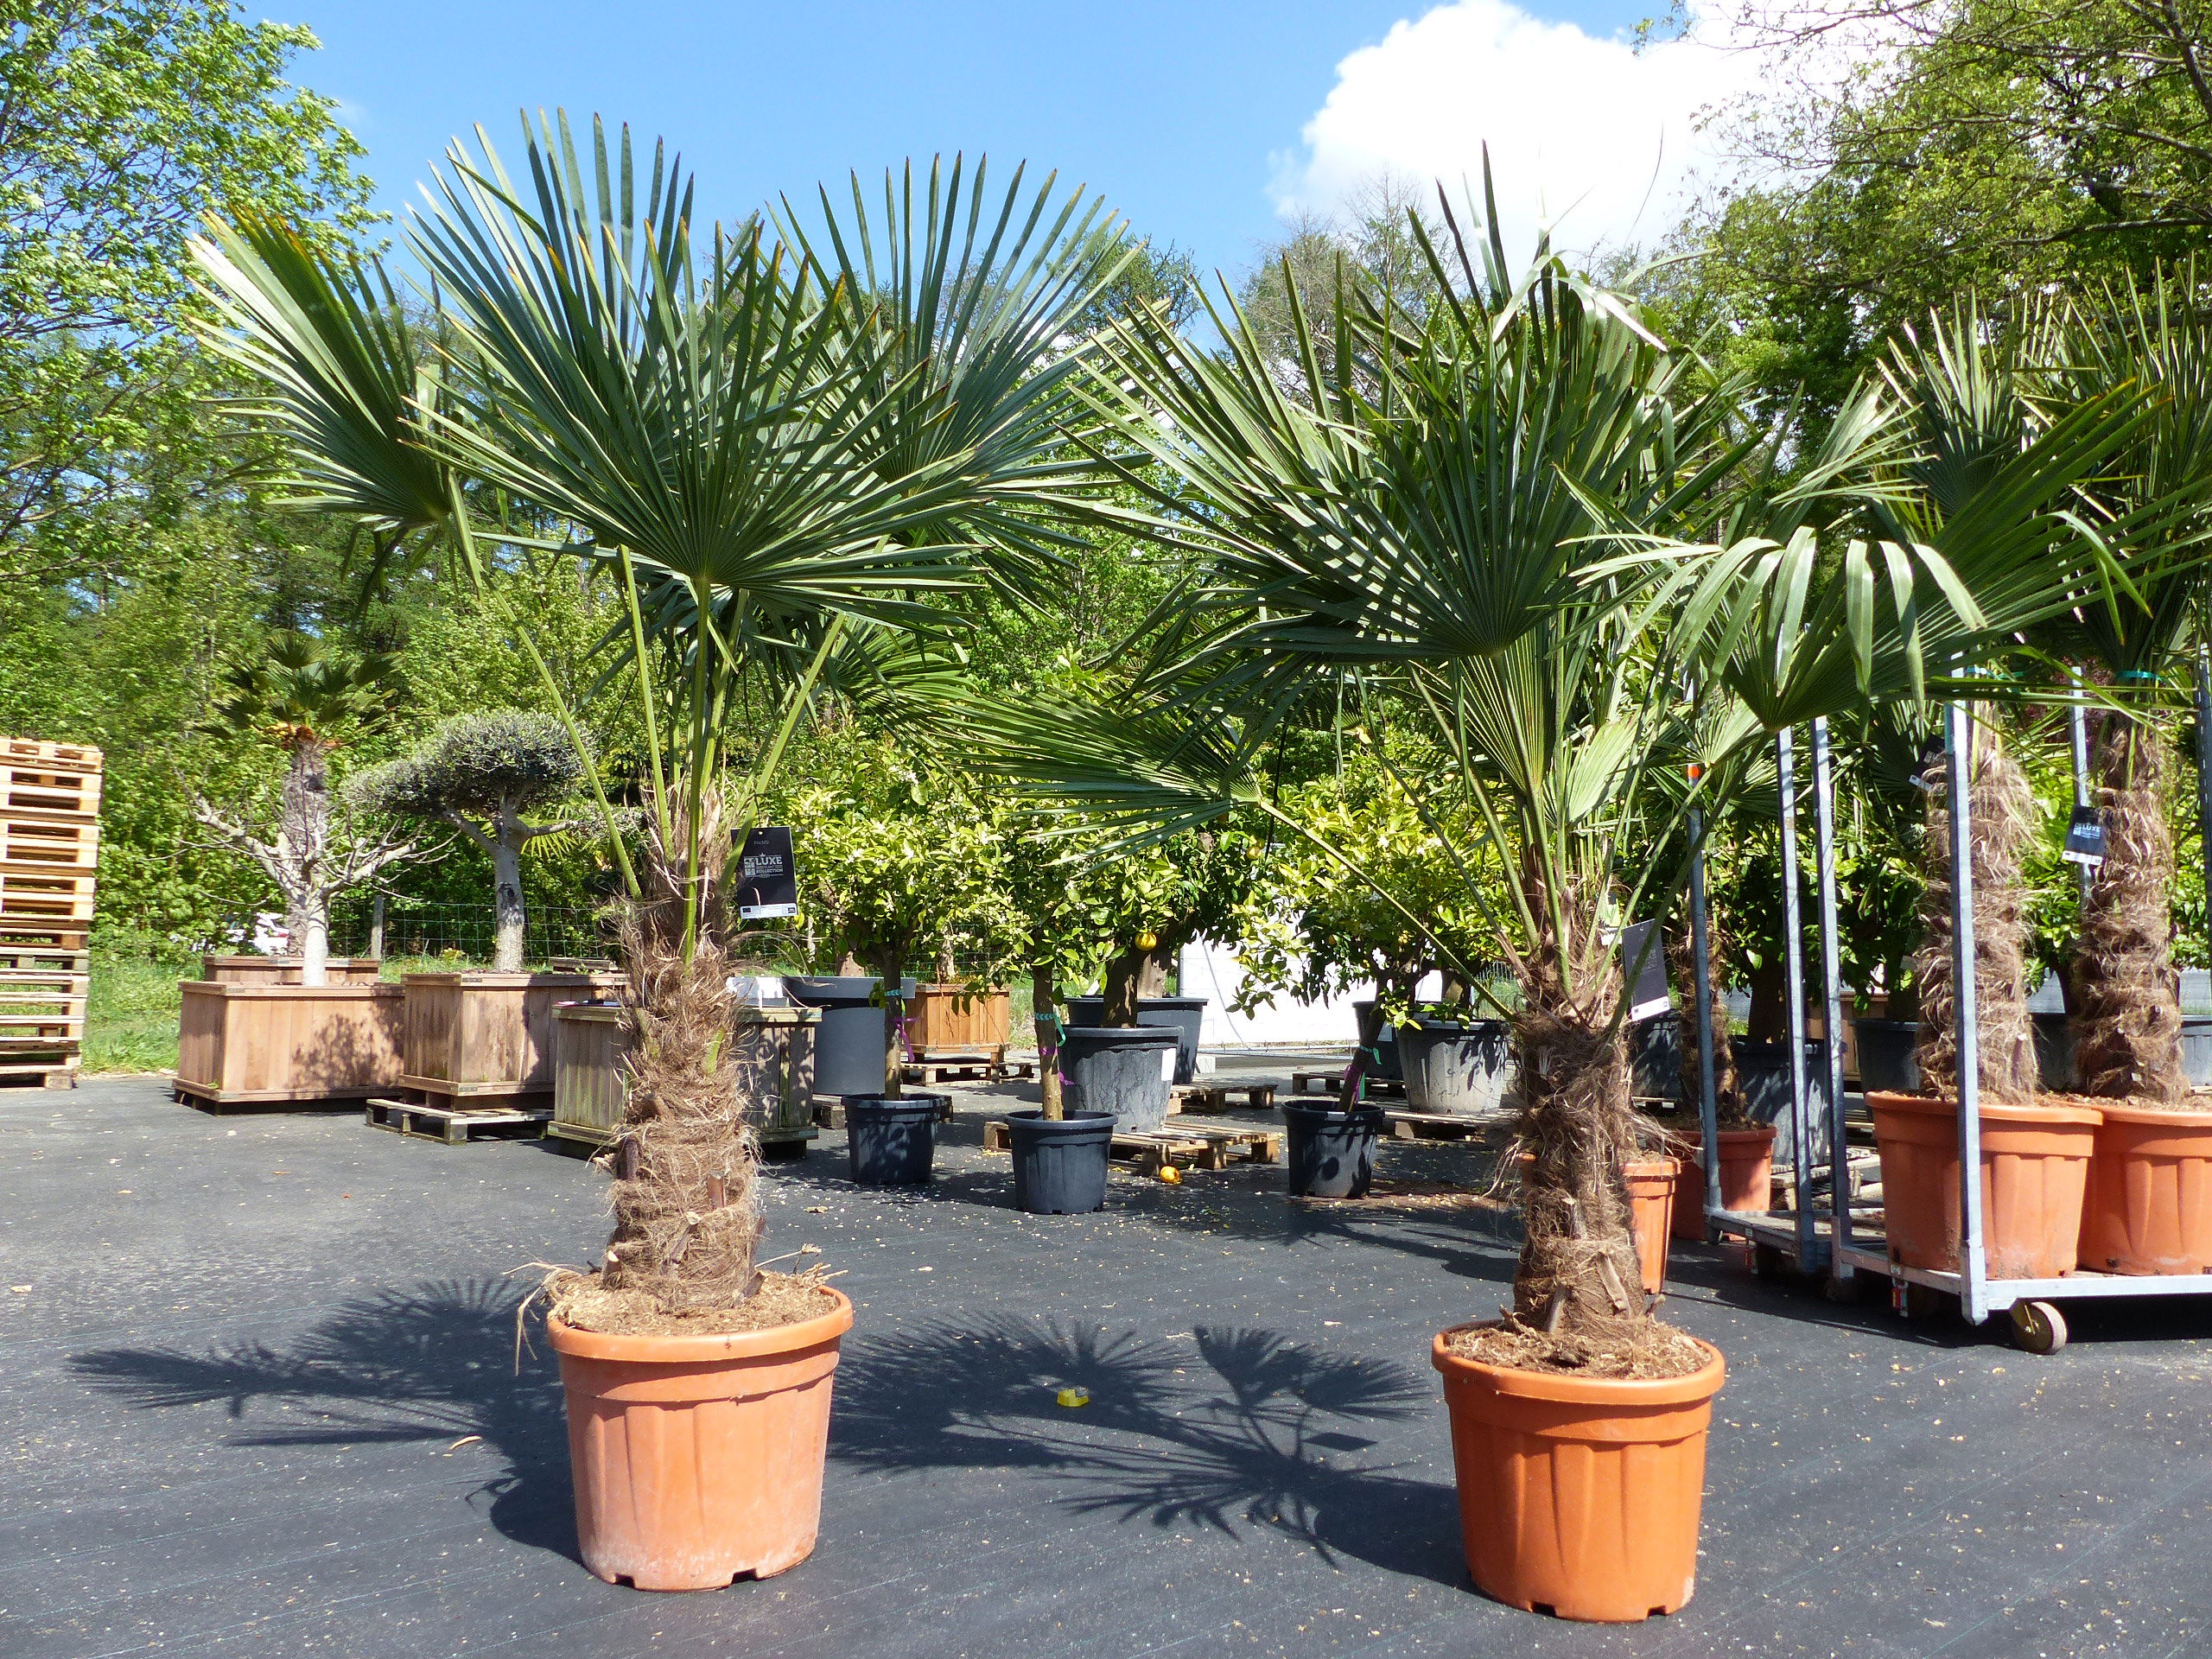 2 Stück im Palmenset Trachycarpus fortunei dicke Stämme 200 cm Hanfpalme, winterharte Palme bis -18°C